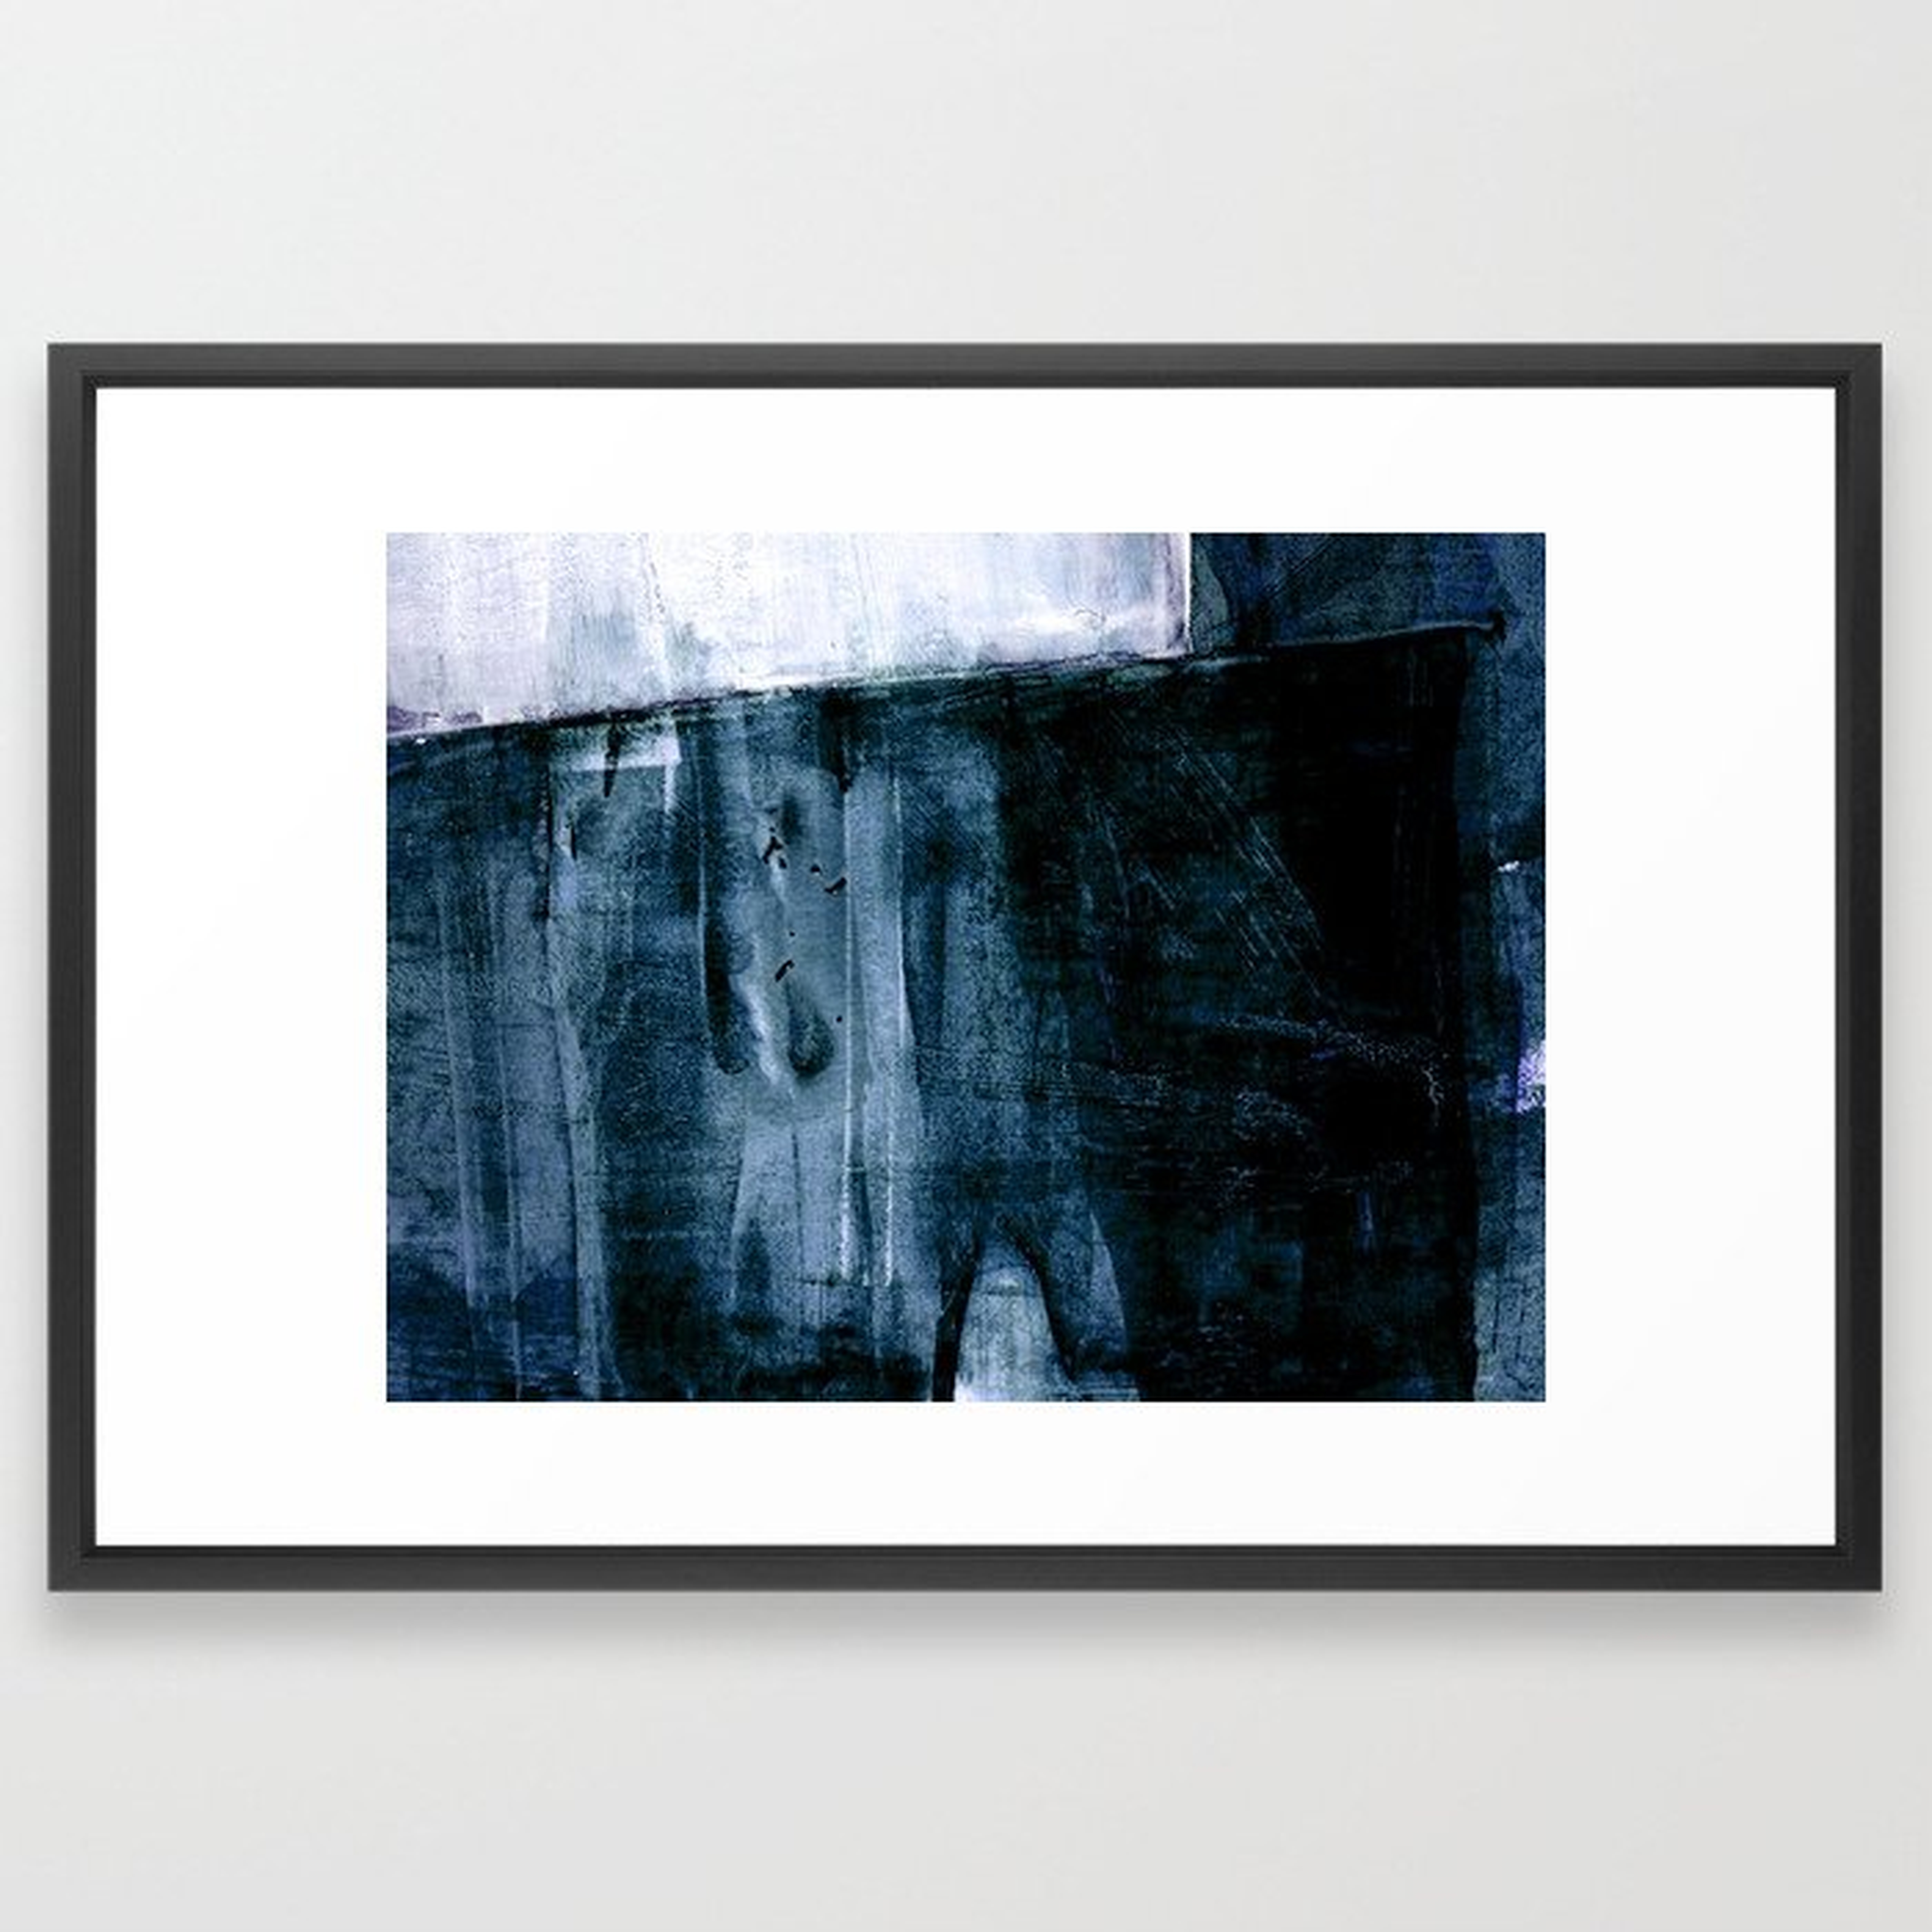 Indigo Blue and White Minimalist Abstract Painting Framed Art Print - Society6